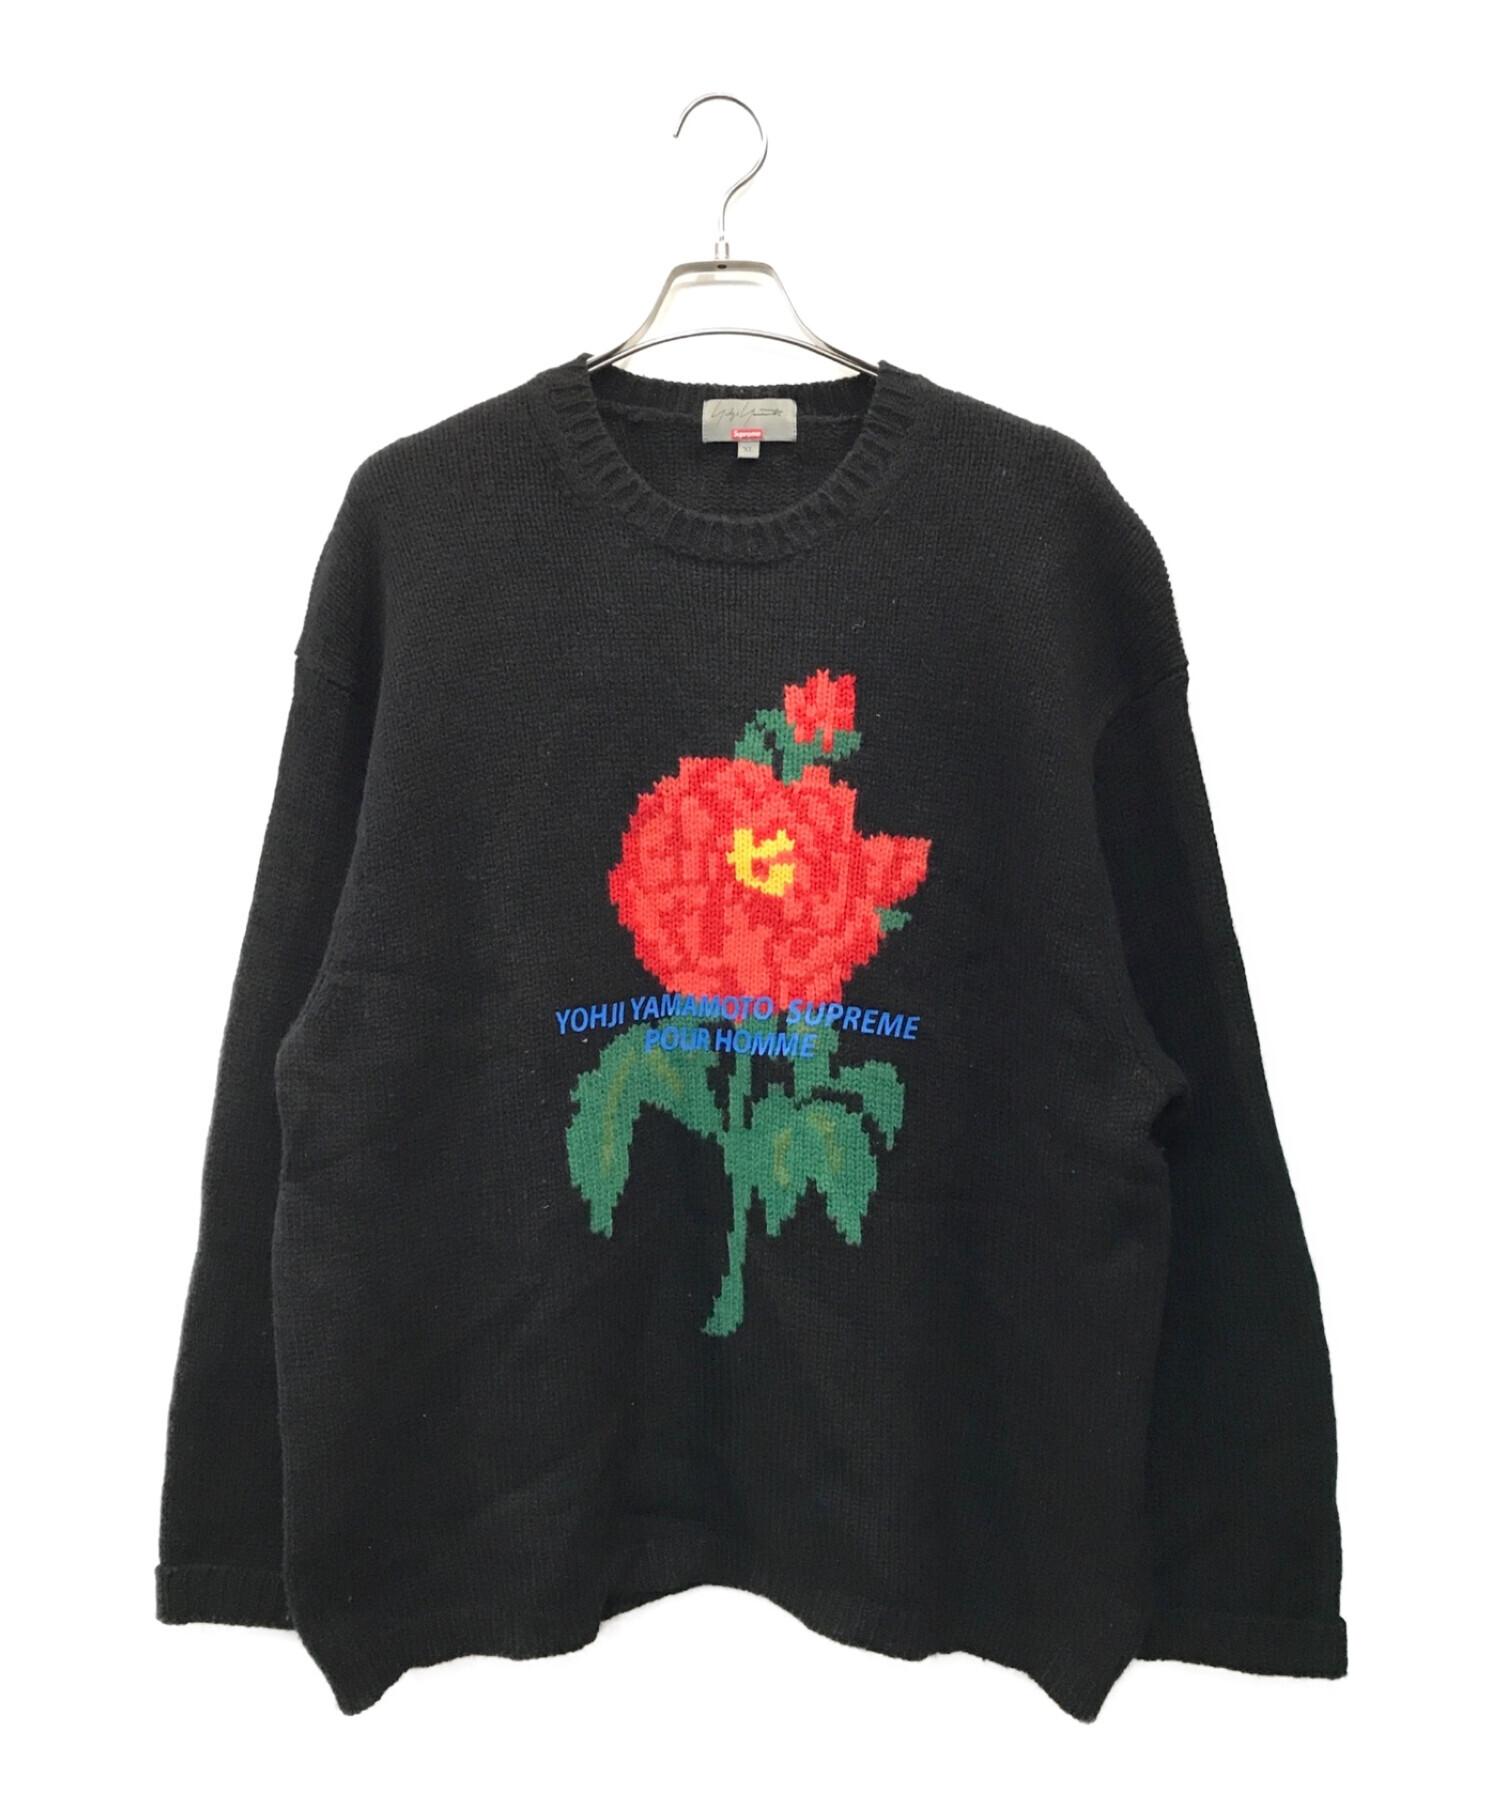 XLサイズ Supreme Yohji Yamamoto Sweater 新品